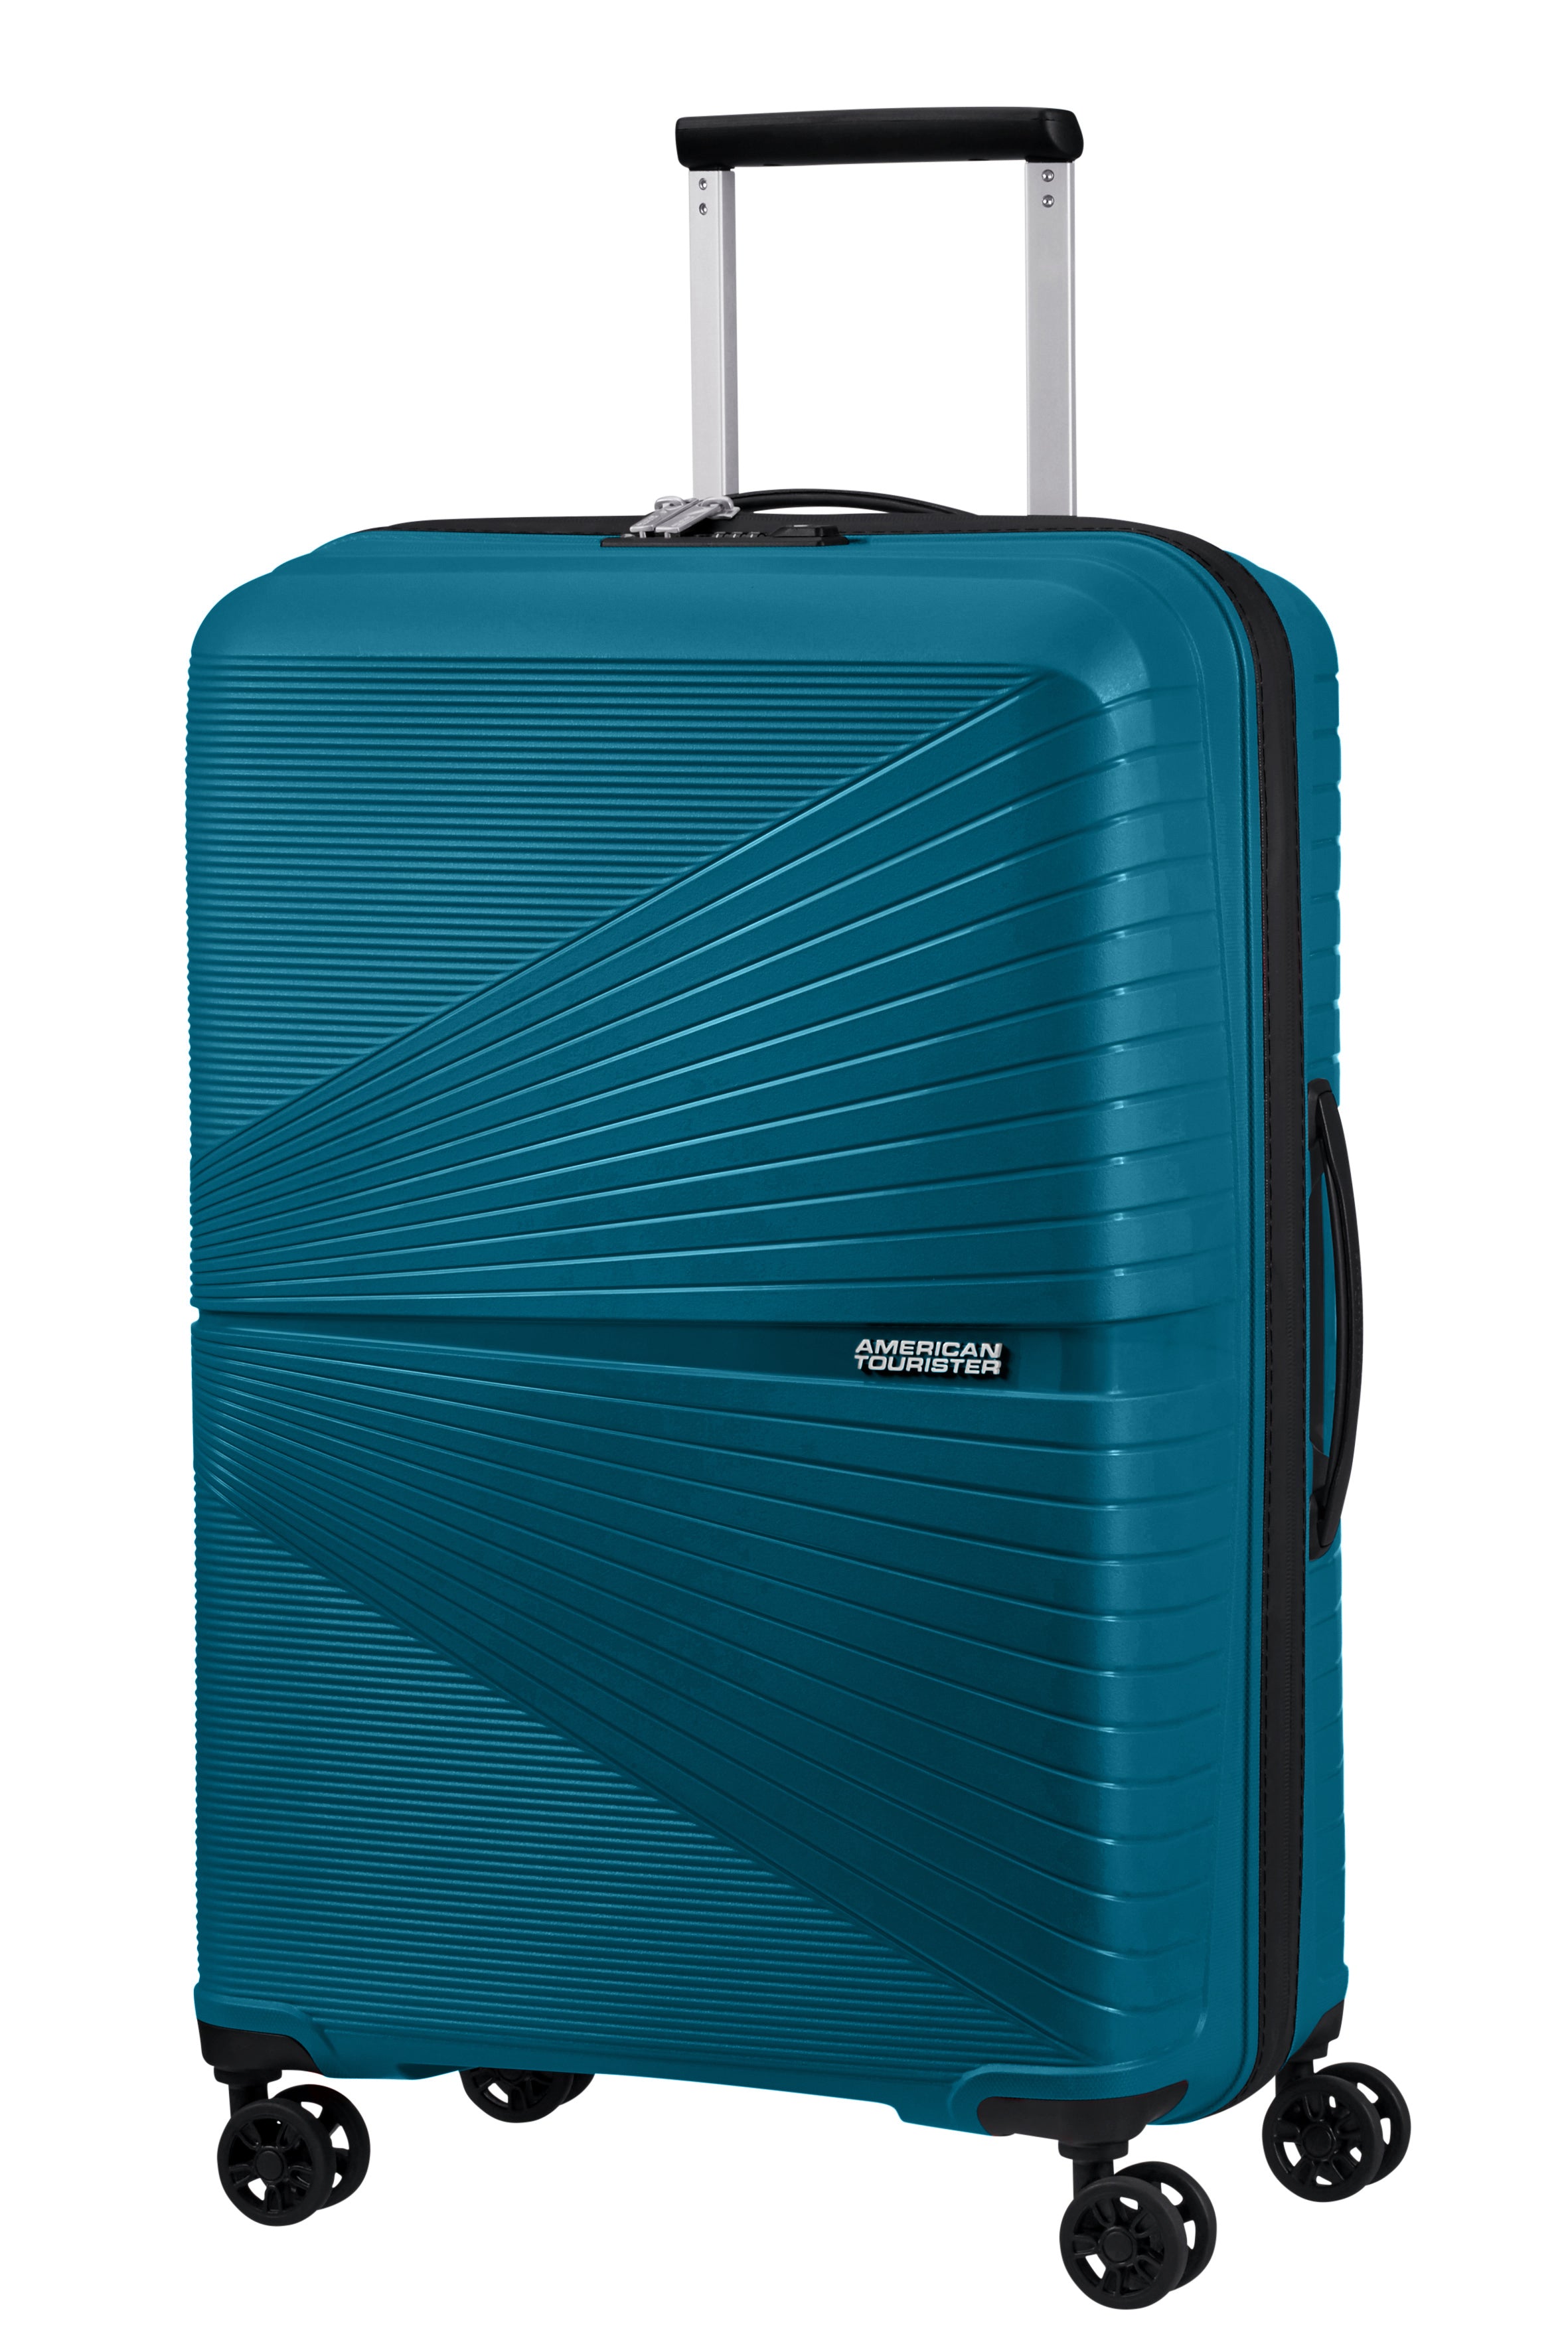 American Tourister - Airconic 67cm Medium Suitcase - Deep Ocean-1